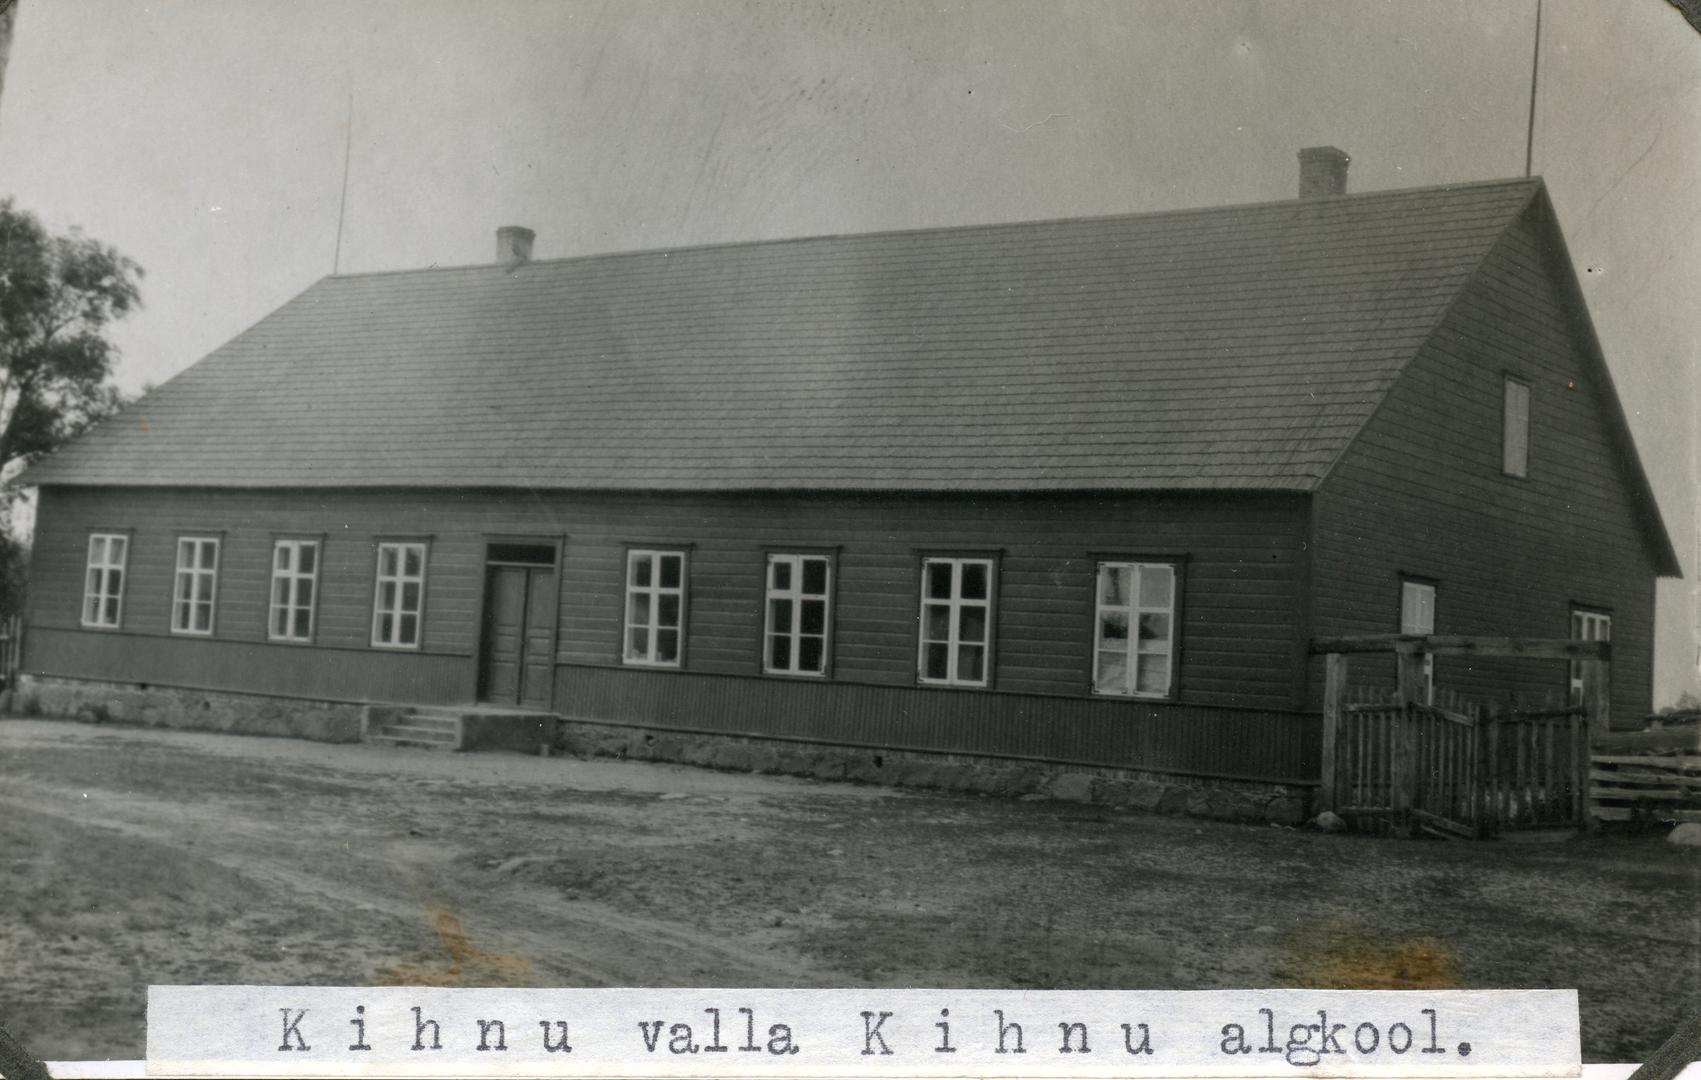 Kihnu Municipality Kihnu Algkooli building